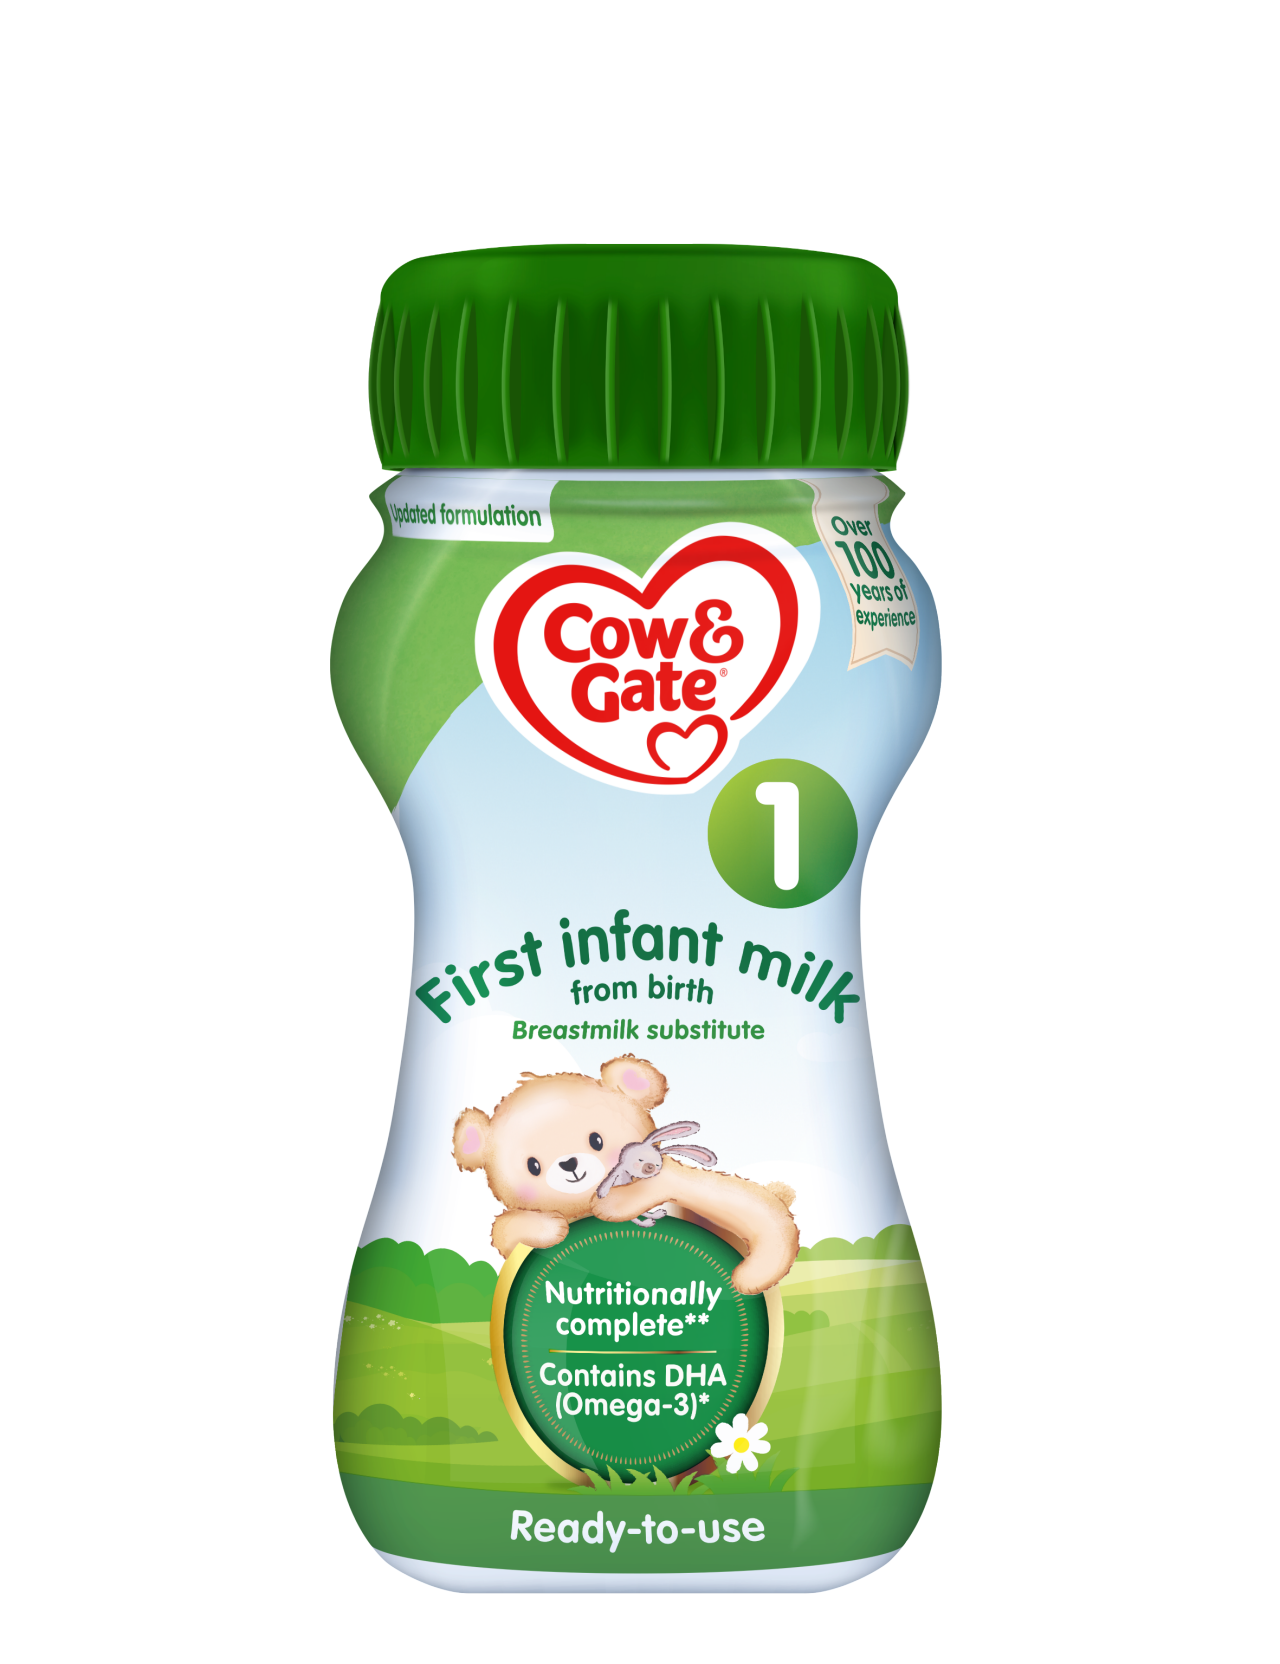 Cow & Gate First Infant milk (Liquid)